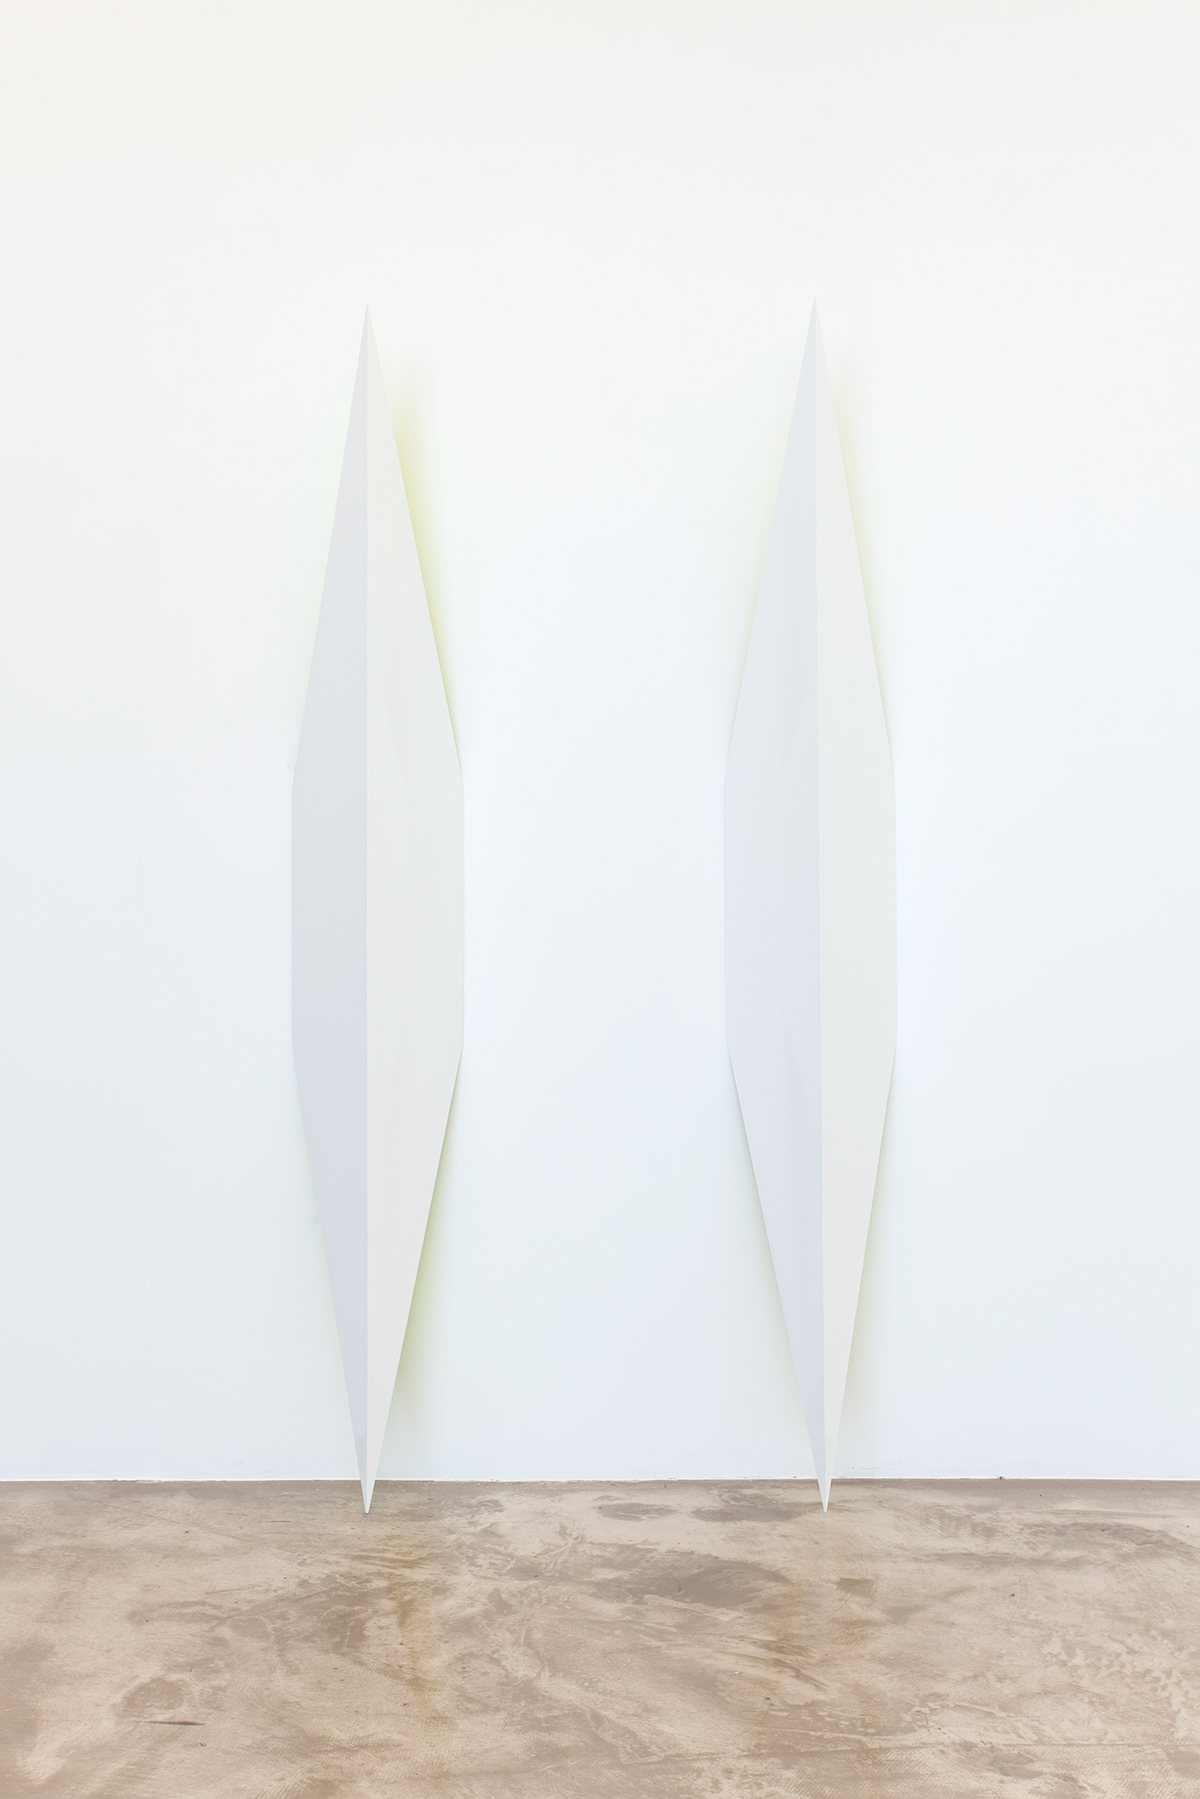   Folded Reflection  Installation view Kristiansand Kunsthall, 2015    